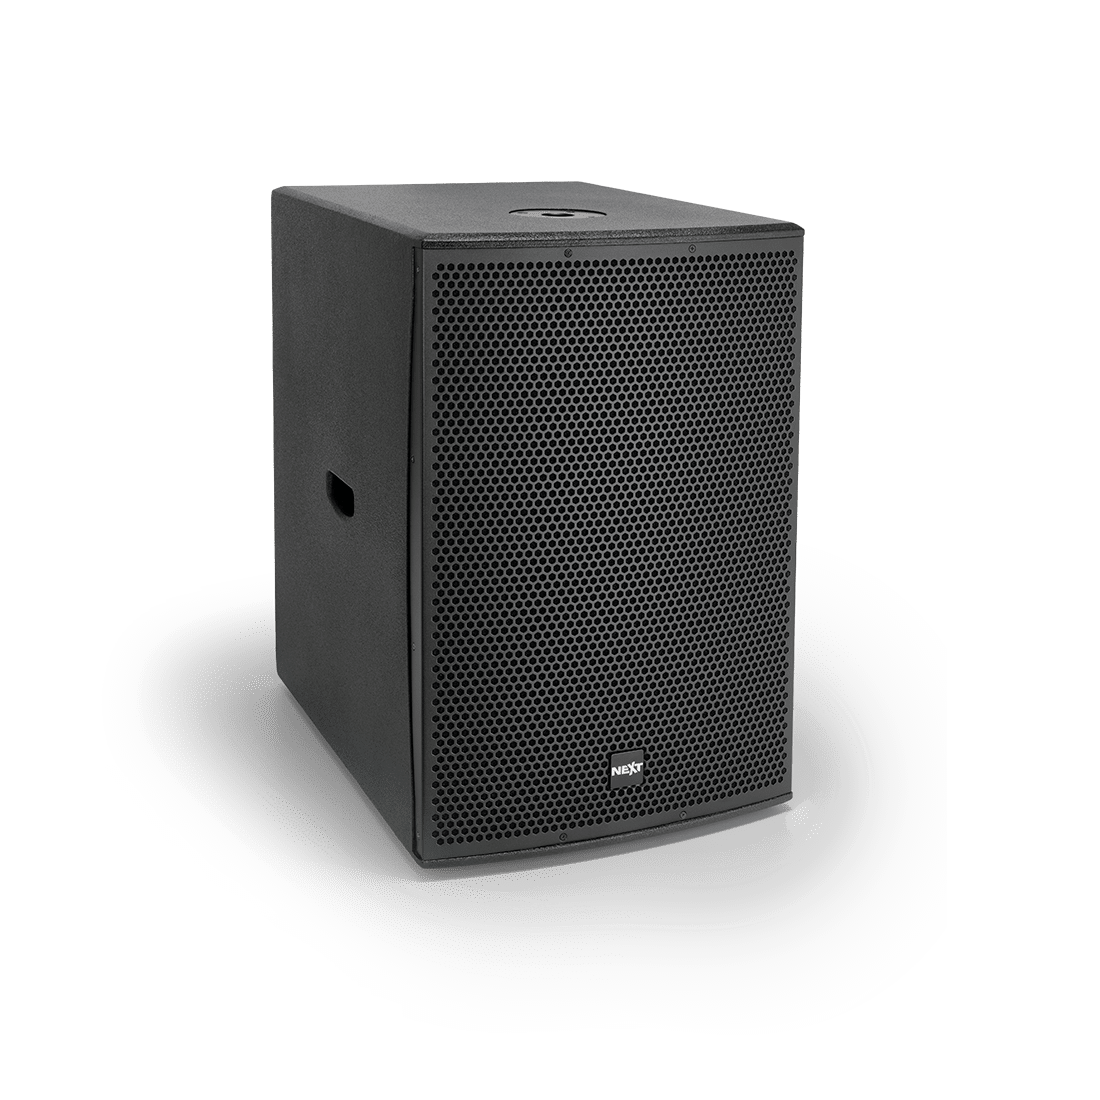 Next Audiocom FLEXi 15 System